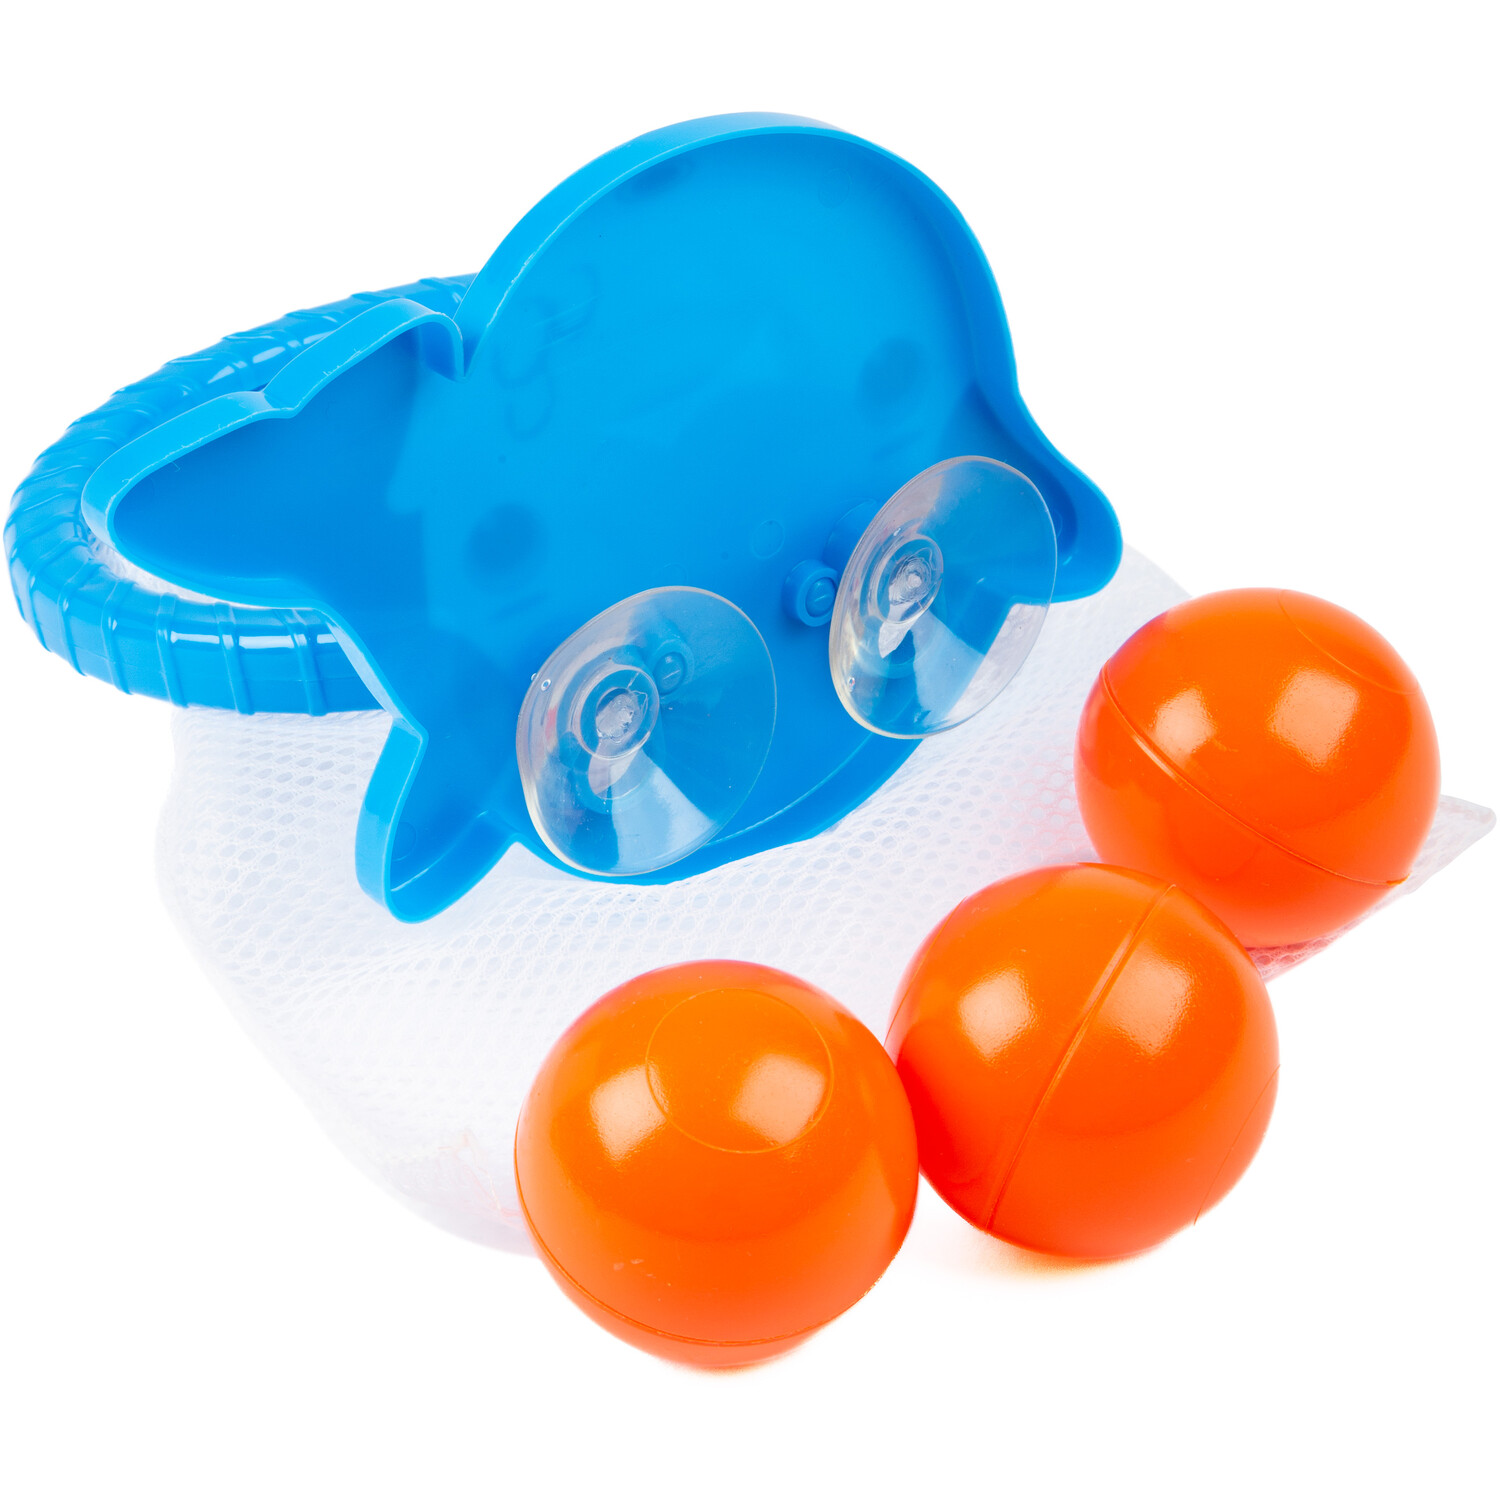 Little Tikes Bath Basketball Toy Set Image 2